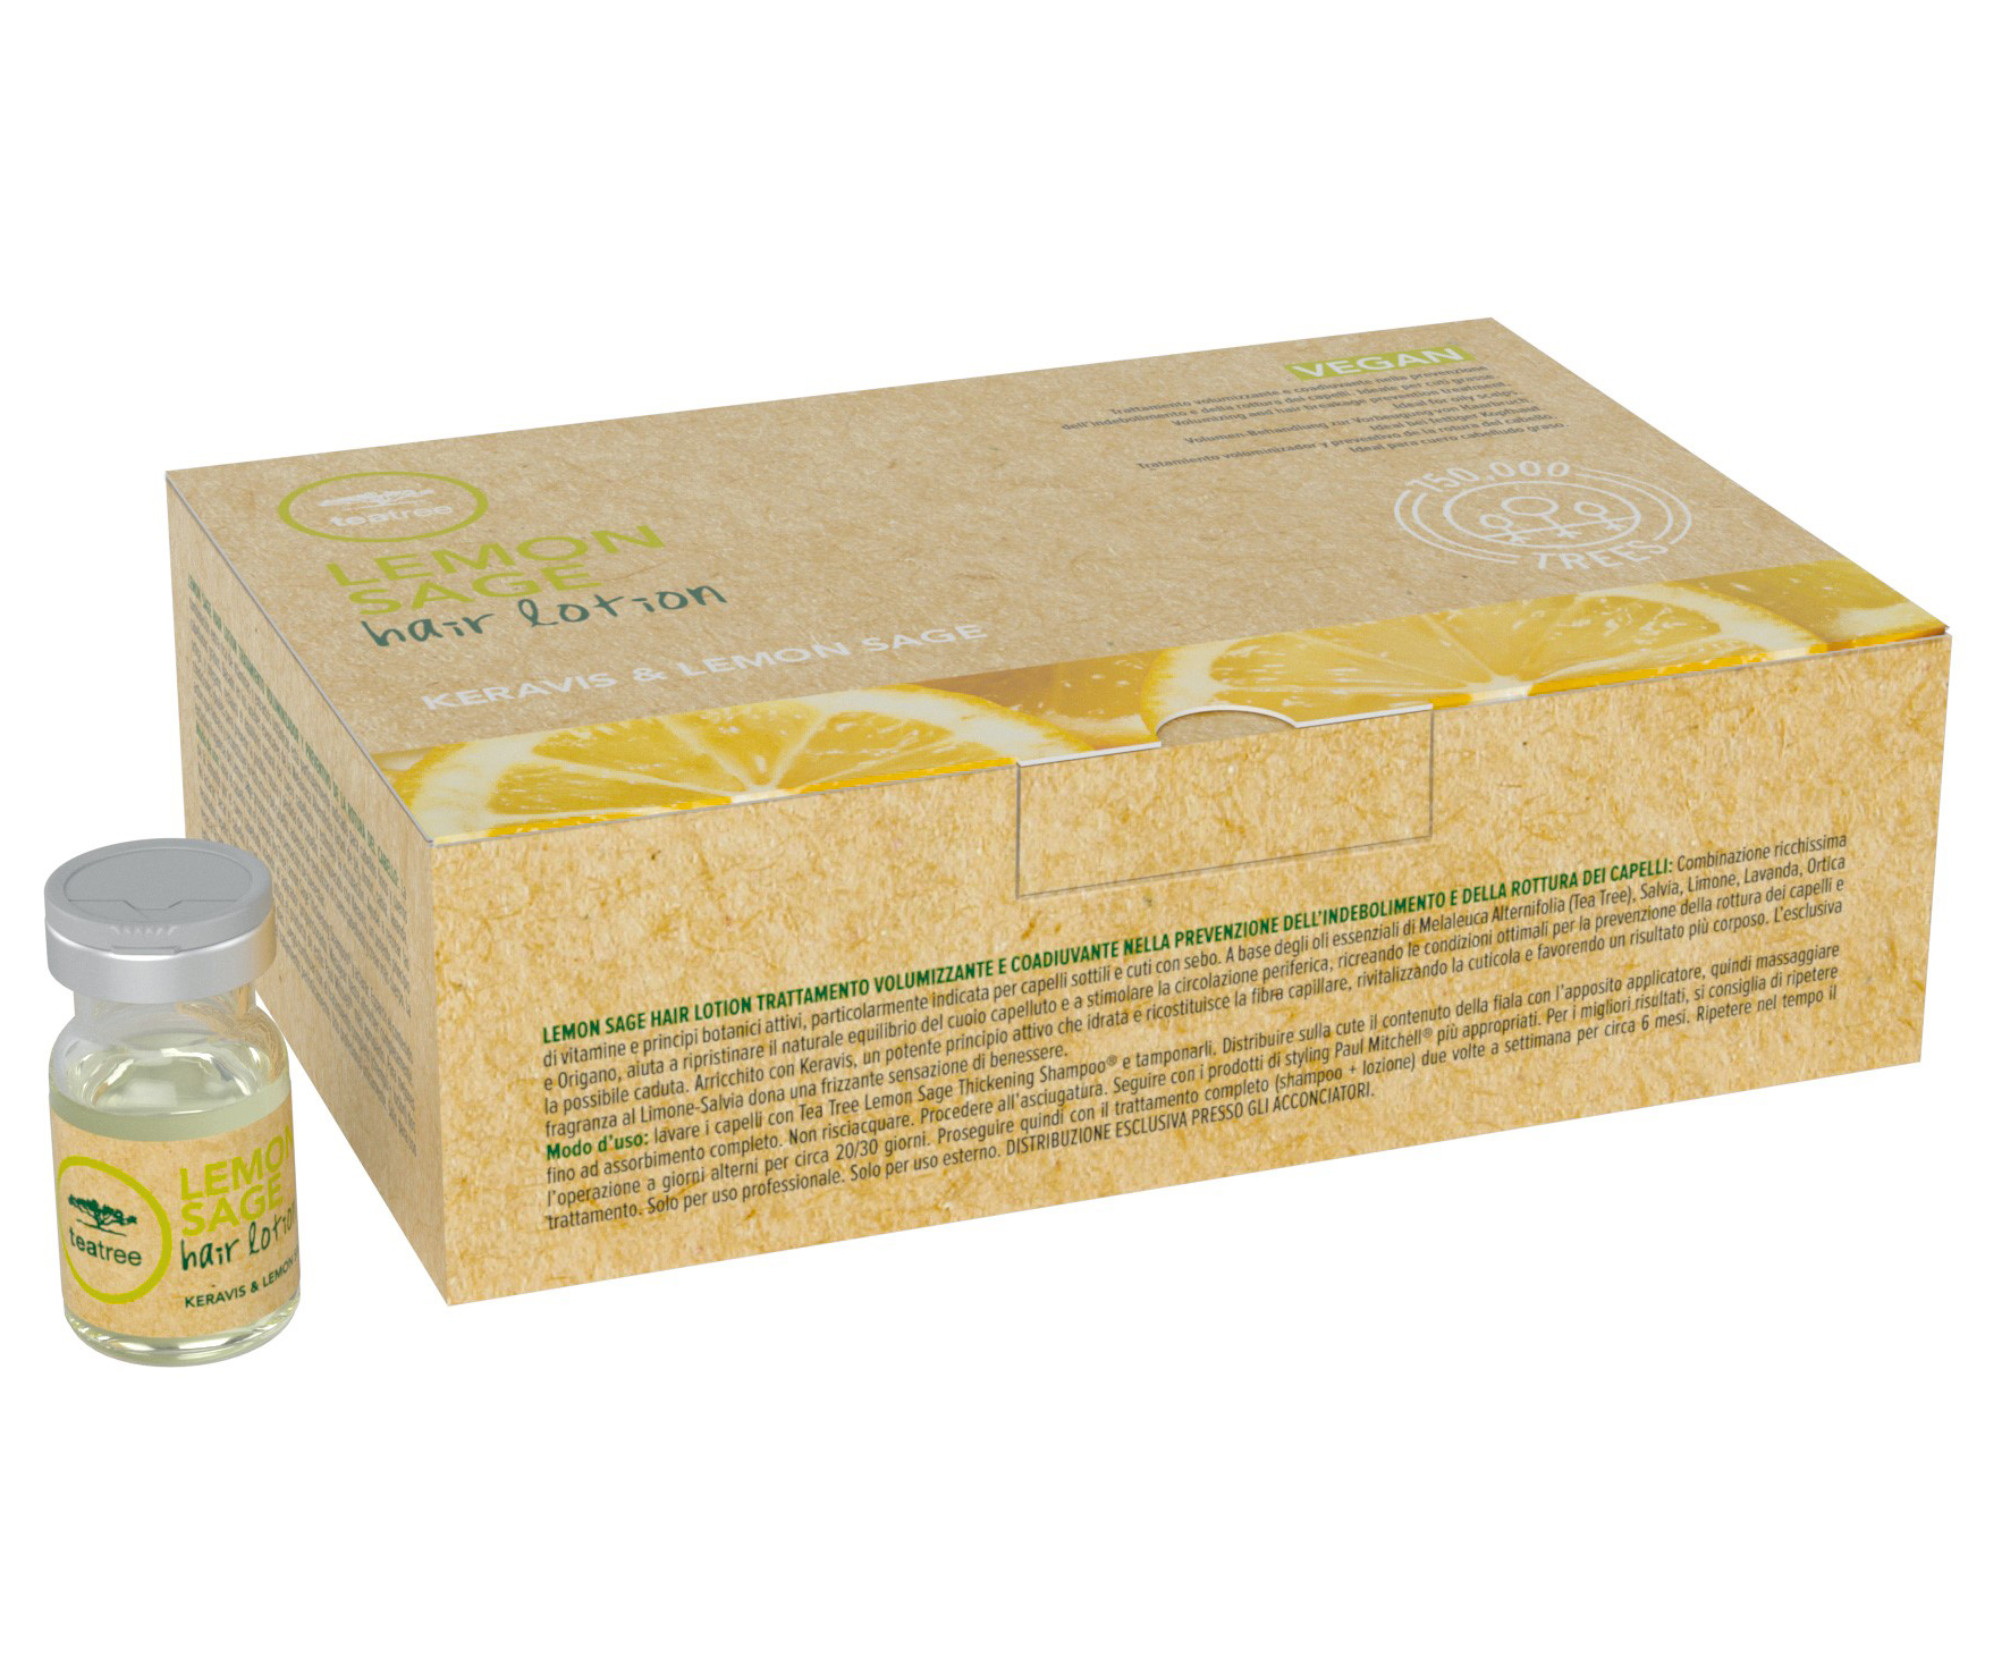 Paul Mitchell Ošetrujúca kúra pre objem vlasov Tea Tree Keravis & Lemon-Sage (Hair Lotion) 12 x 6 ml